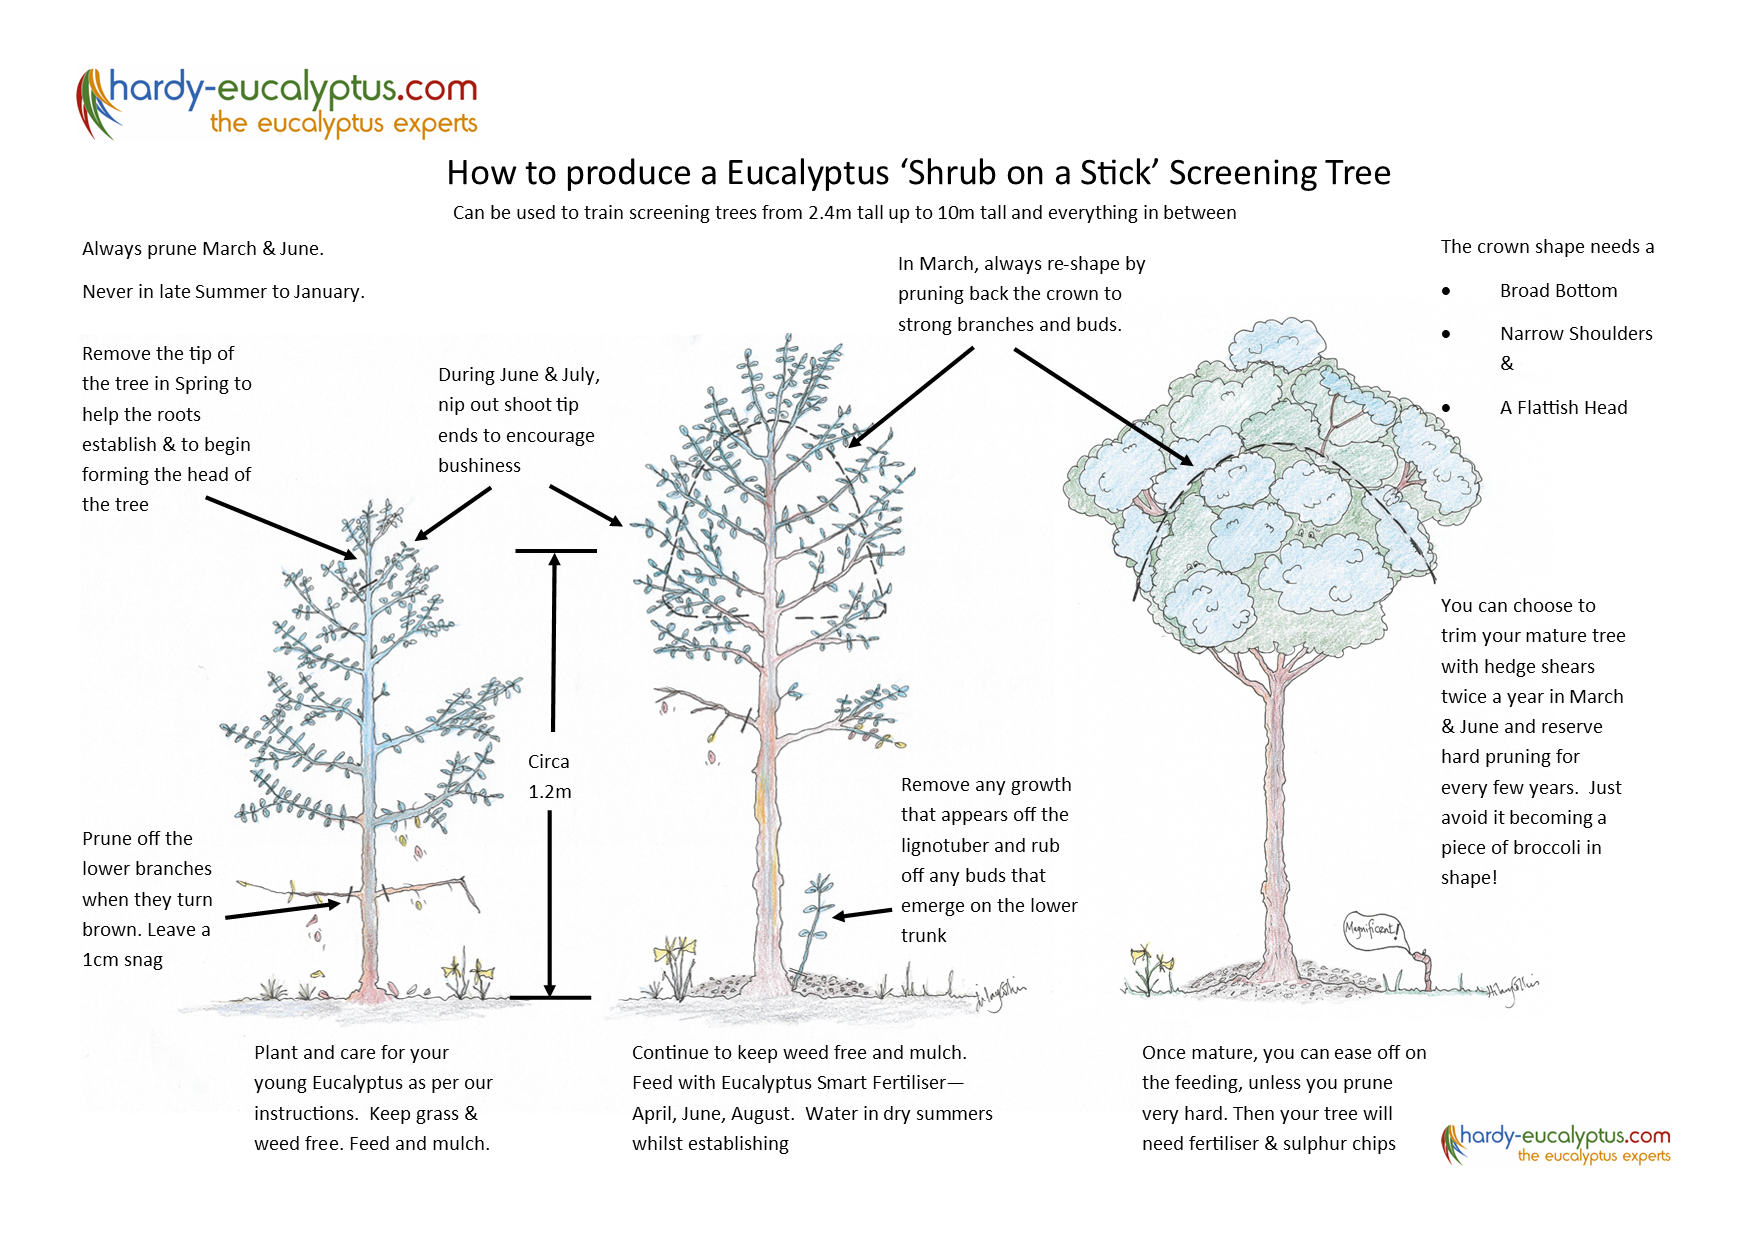 How to produce a Eucalyptus 'Shrub on a stick" as a screening tree